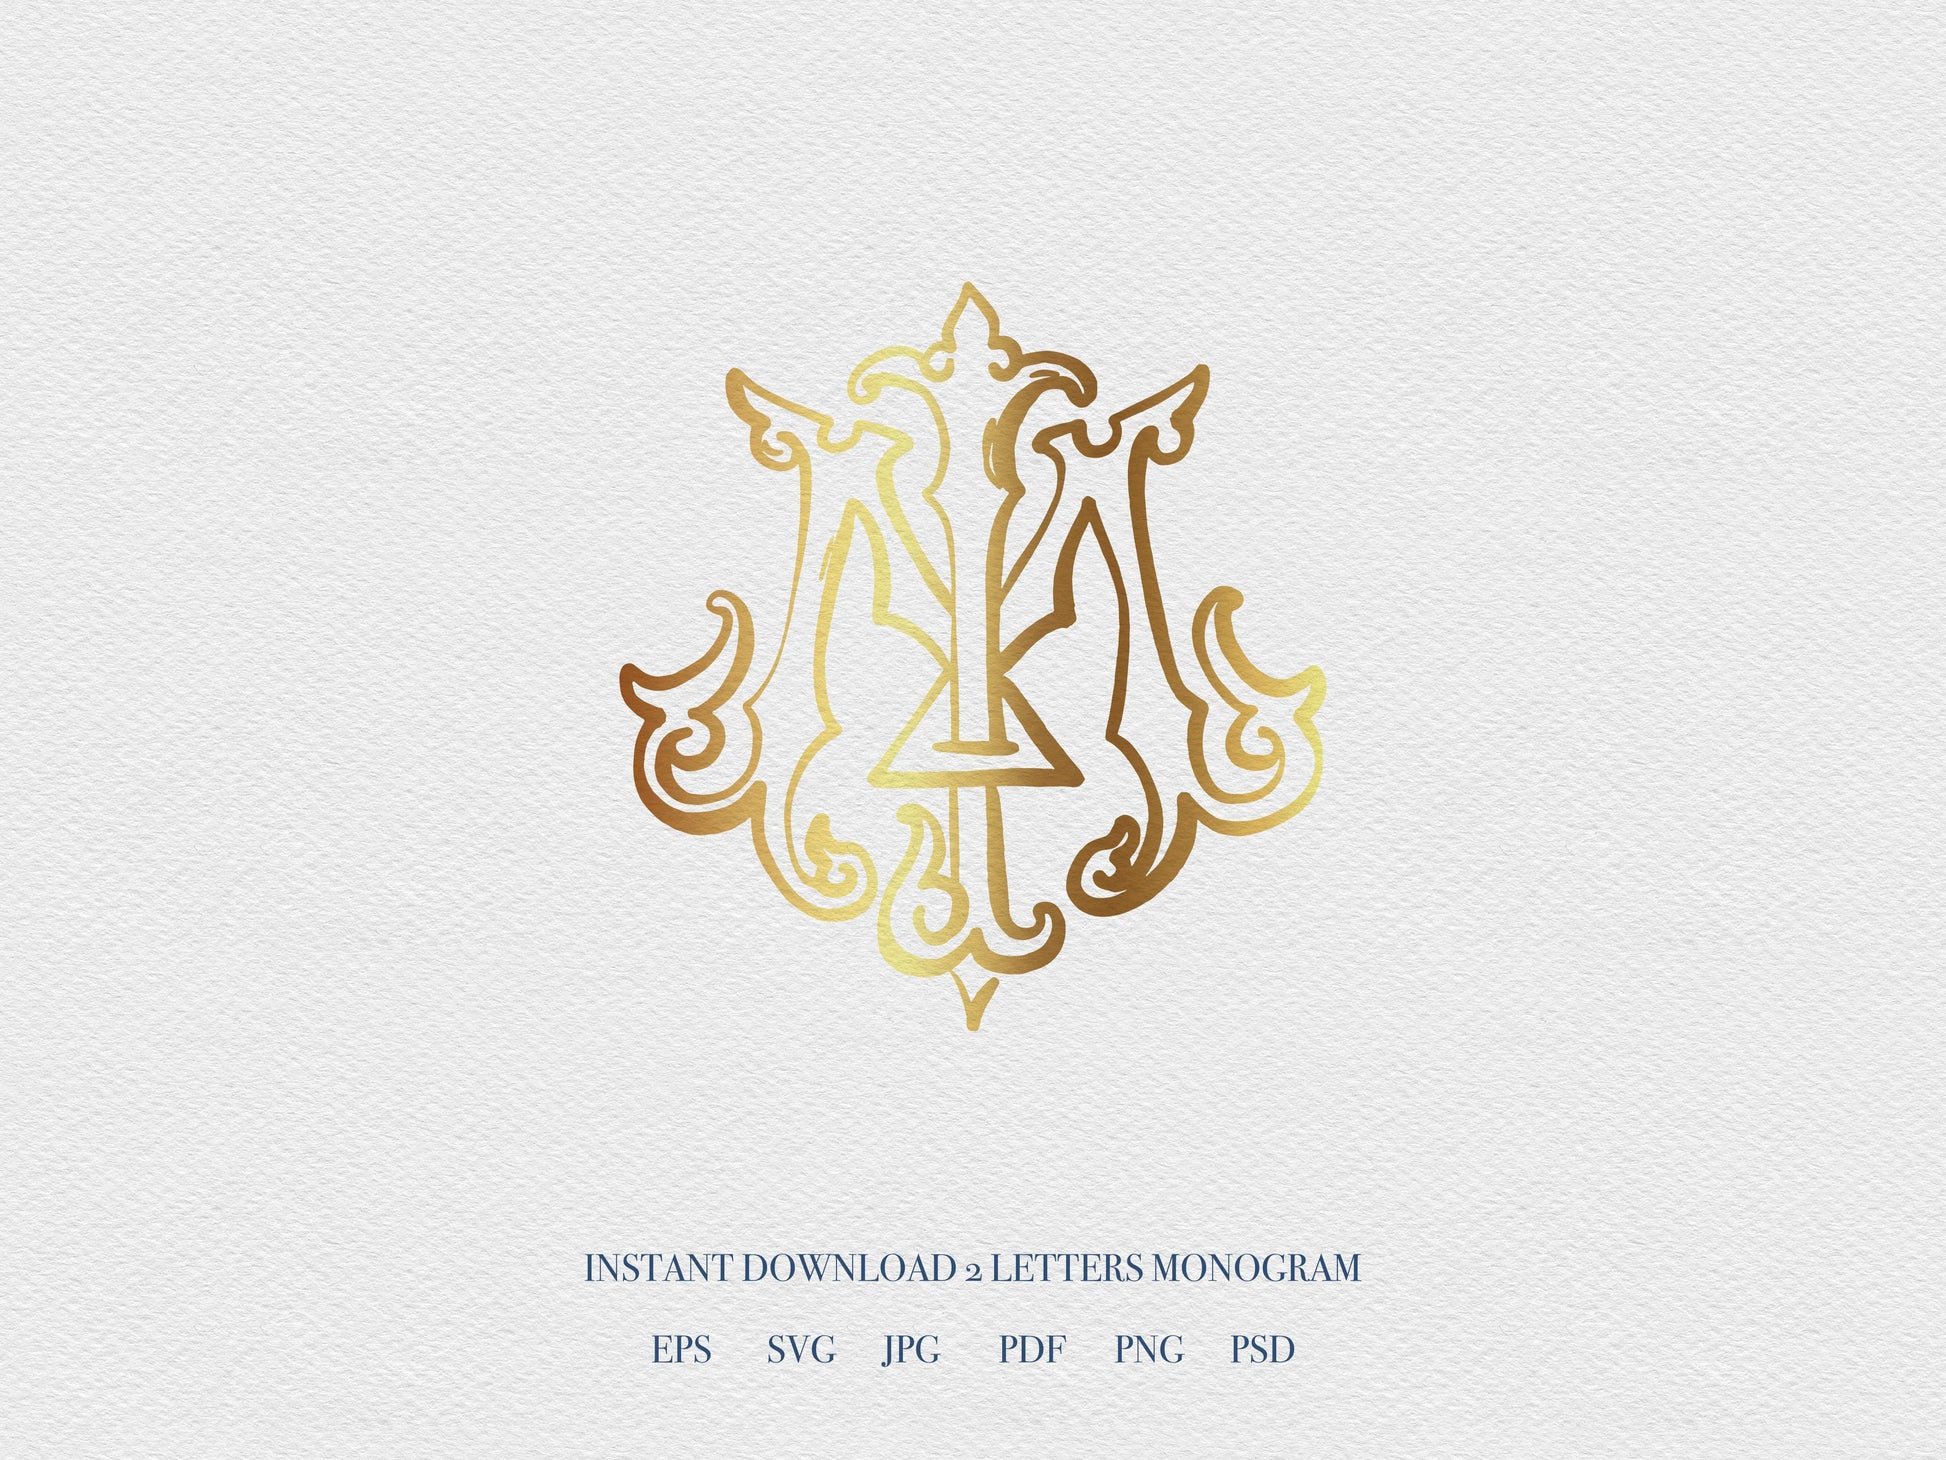 2 Letter Monogram with Letters MI | Digital Download - Wedding Monogram SVG, Personal Logo, Wedding Logo for Wedding Invitations The Wedding Crest Lab